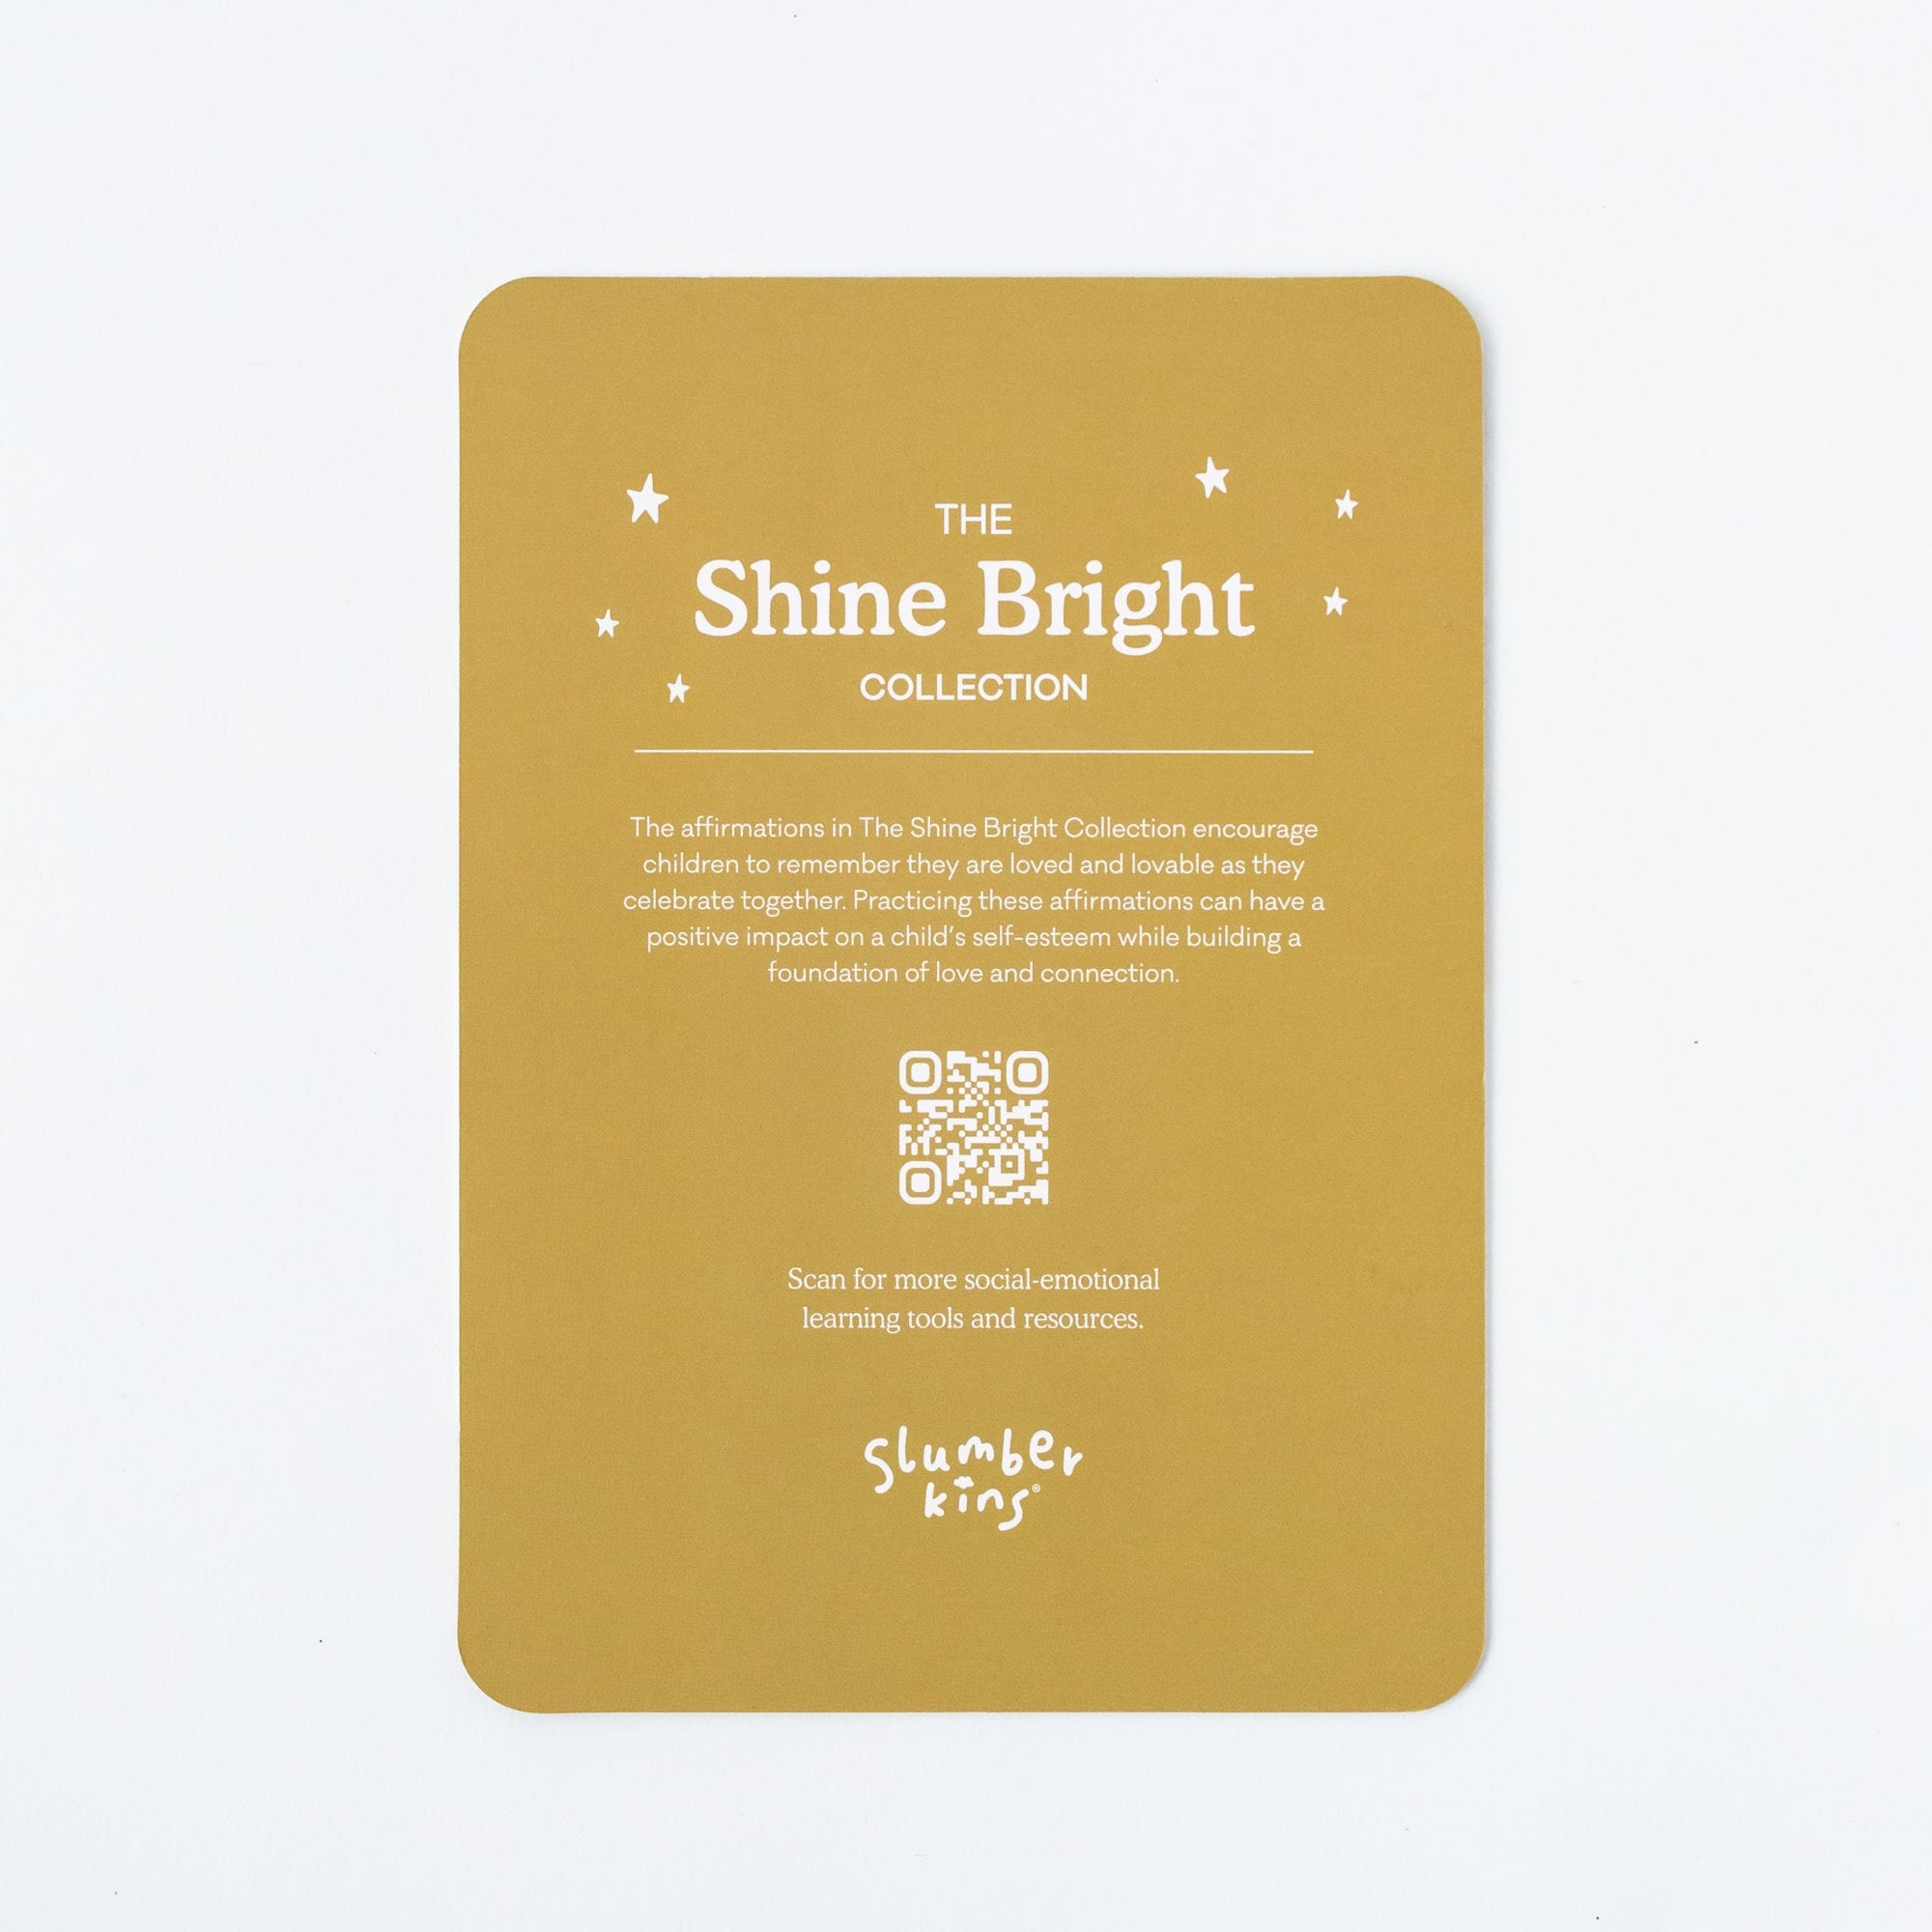 Shine Bright Unicorn Kin Single - View Product